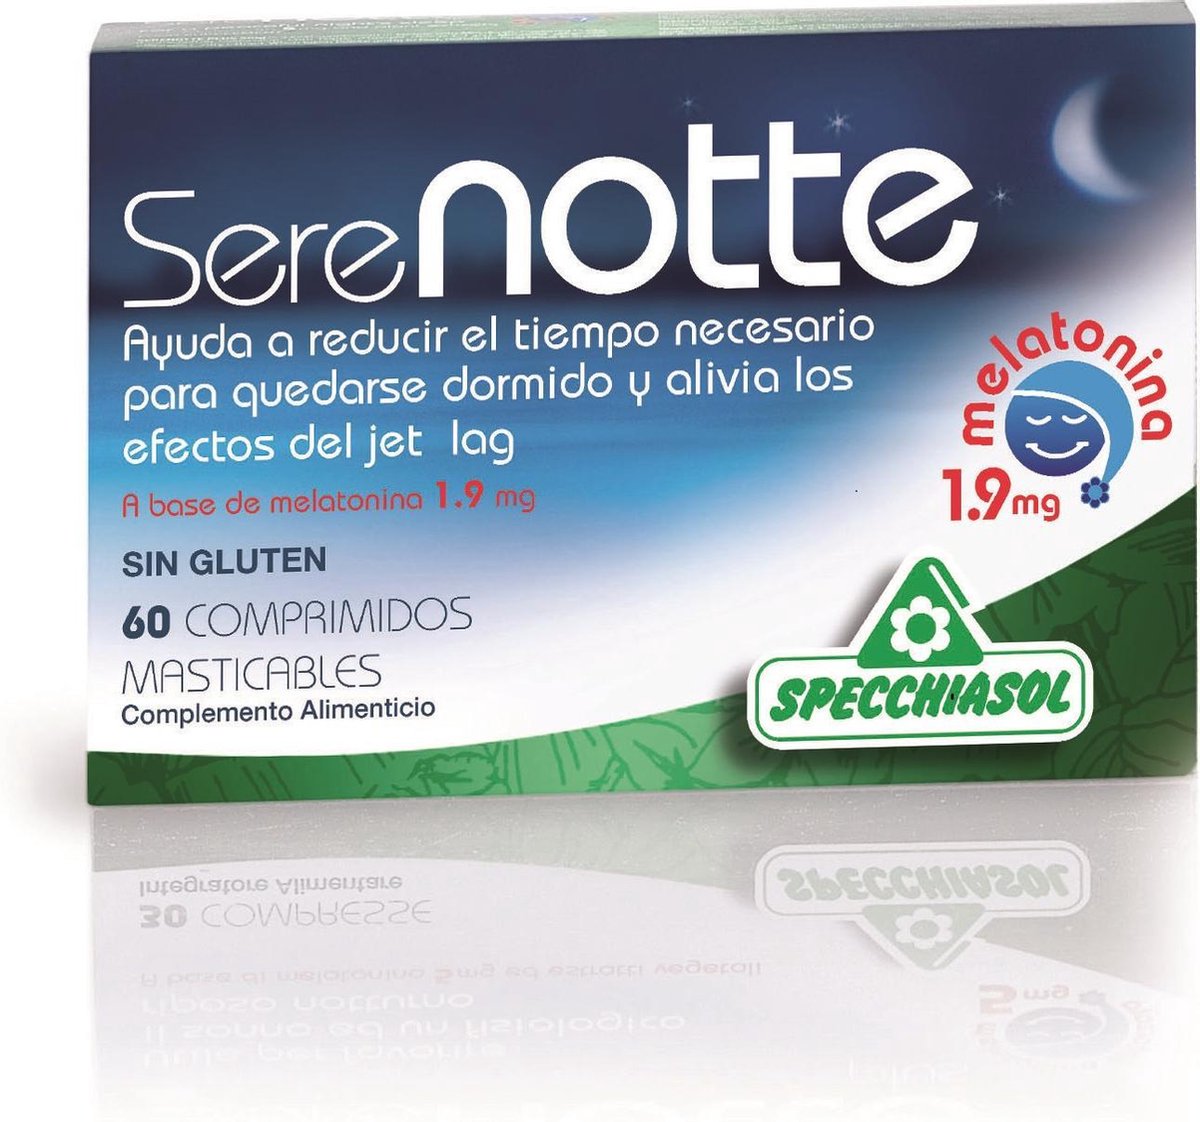 Specchiaso Serenotte 60 Comp - Melatonina 1.9 Mg